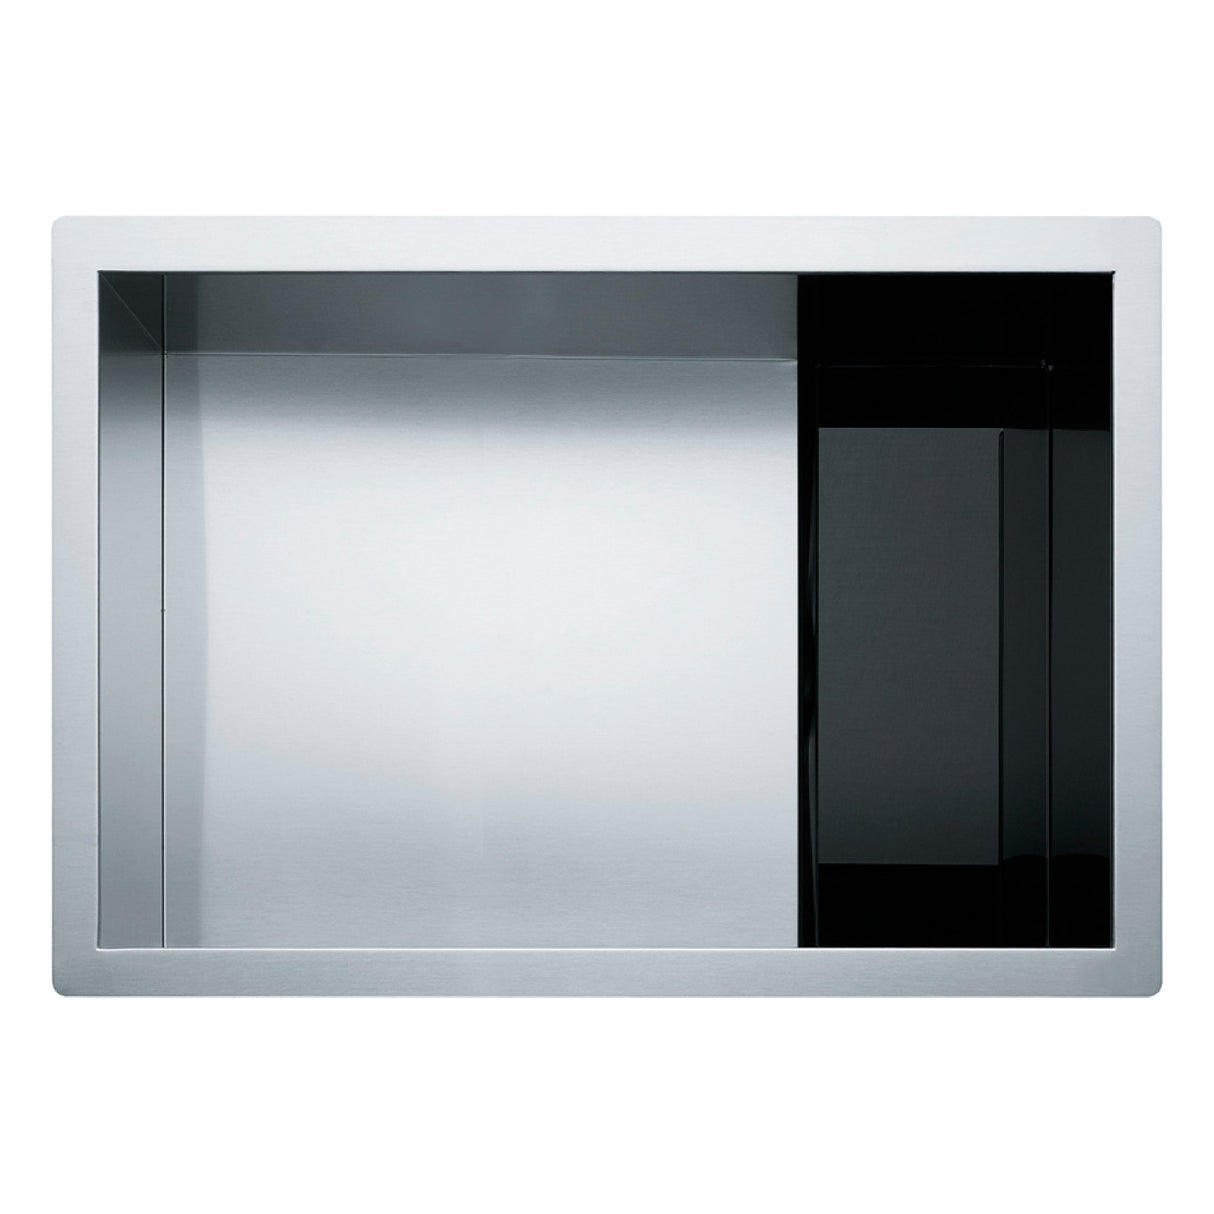 FRANKE CLV110-24 Crystal 26.5-in. x 19.0-in. 16 Gauge Stainless Steel Undermount Single Bowl Kitchen Sink - CLV110-24 In Diamond